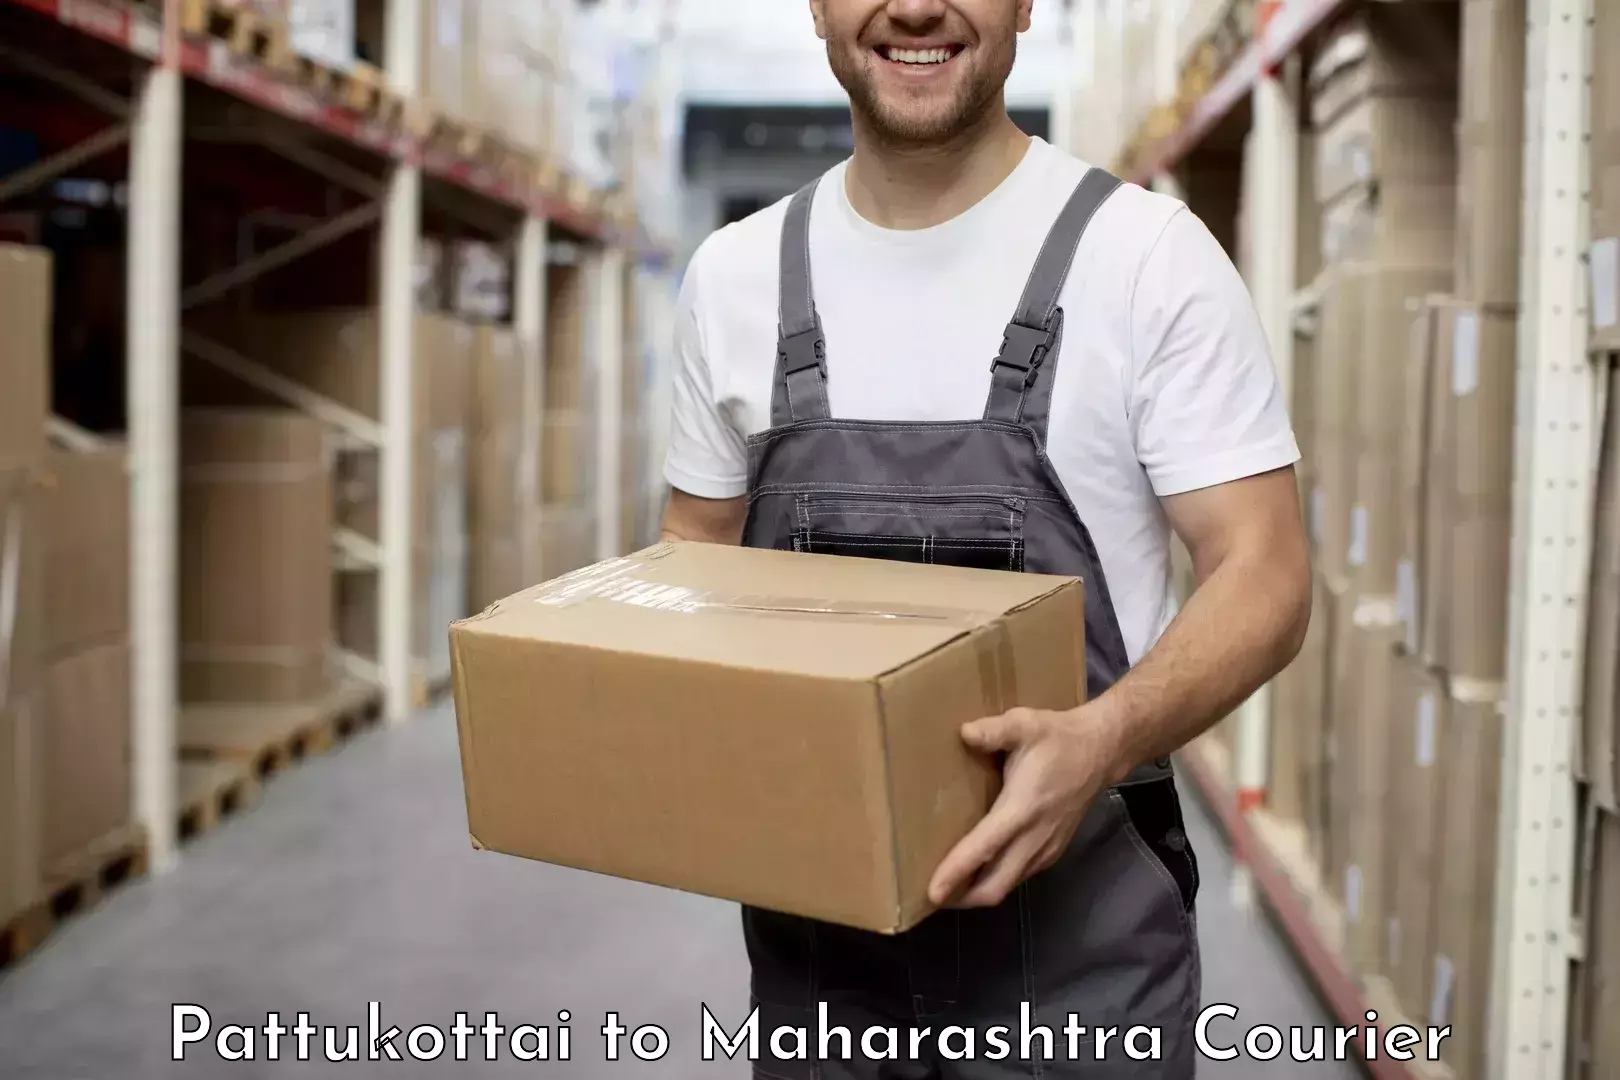 Package delivery network Pattukottai to Brahmapuri